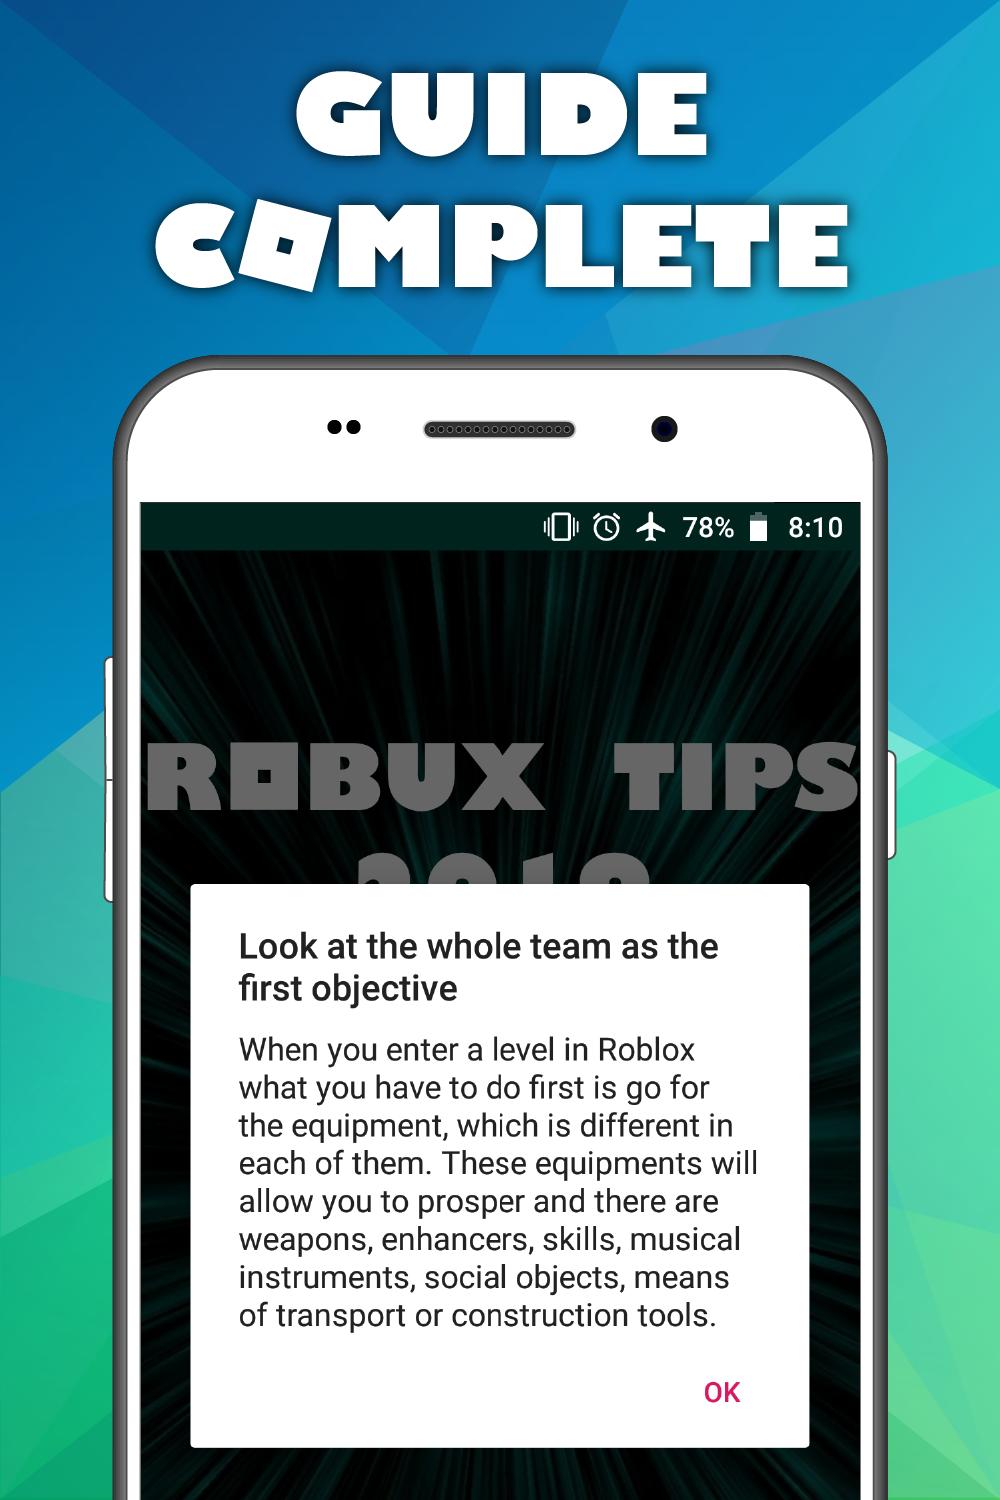 Guia Robux Para Roblox 2019 For Android Apk Download - como tener robux gratis unica manera real y legal para tener robux